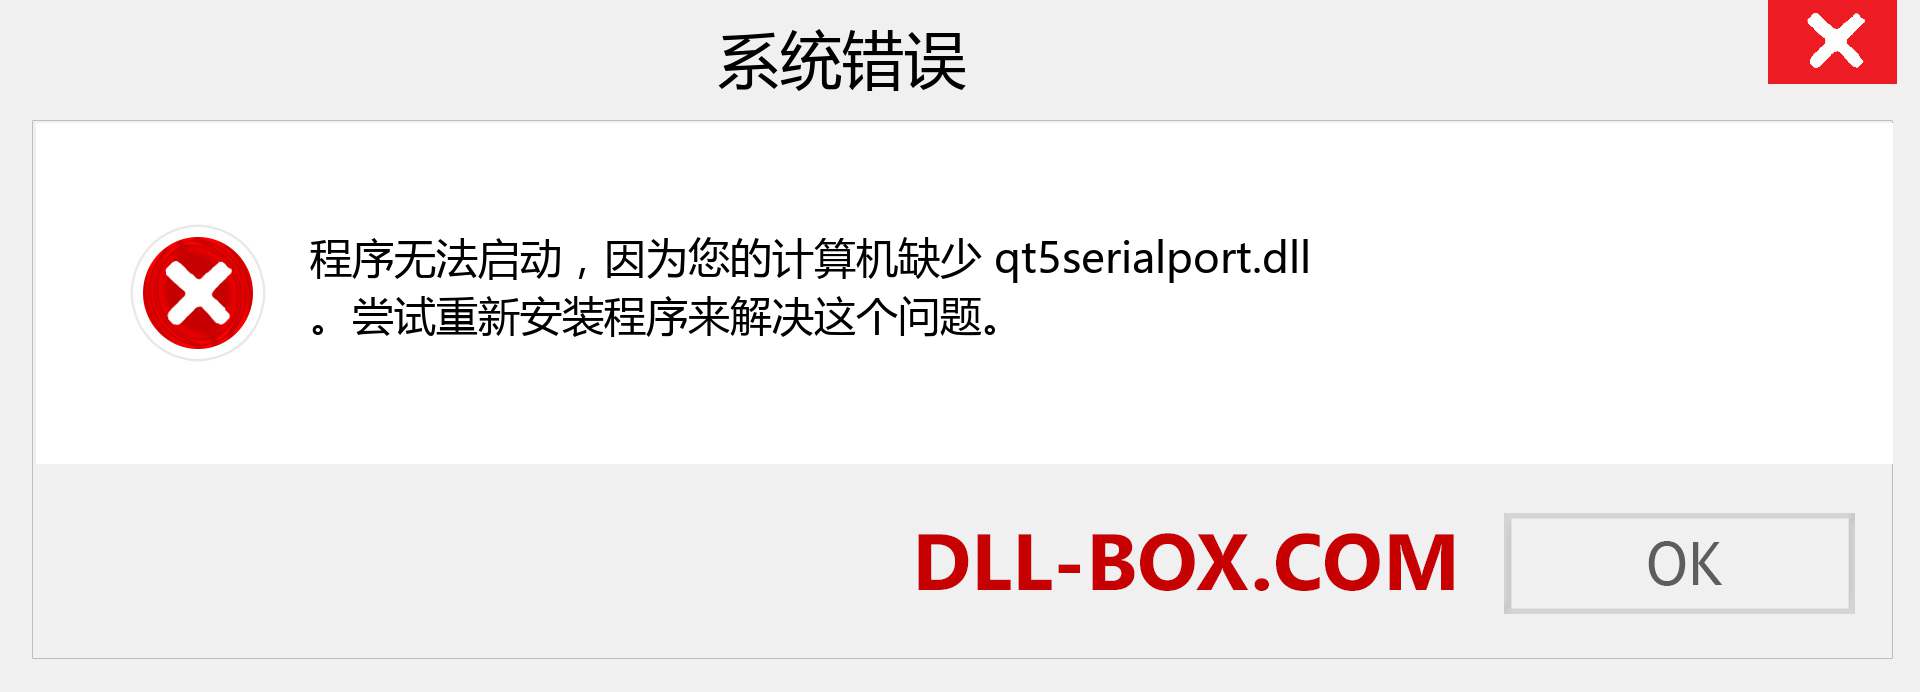 qt5serialport.dll 文件丢失？。 适用于 Windows 7、8、10 的下载 - 修复 Windows、照片、图像上的 qt5serialport dll 丢失错误